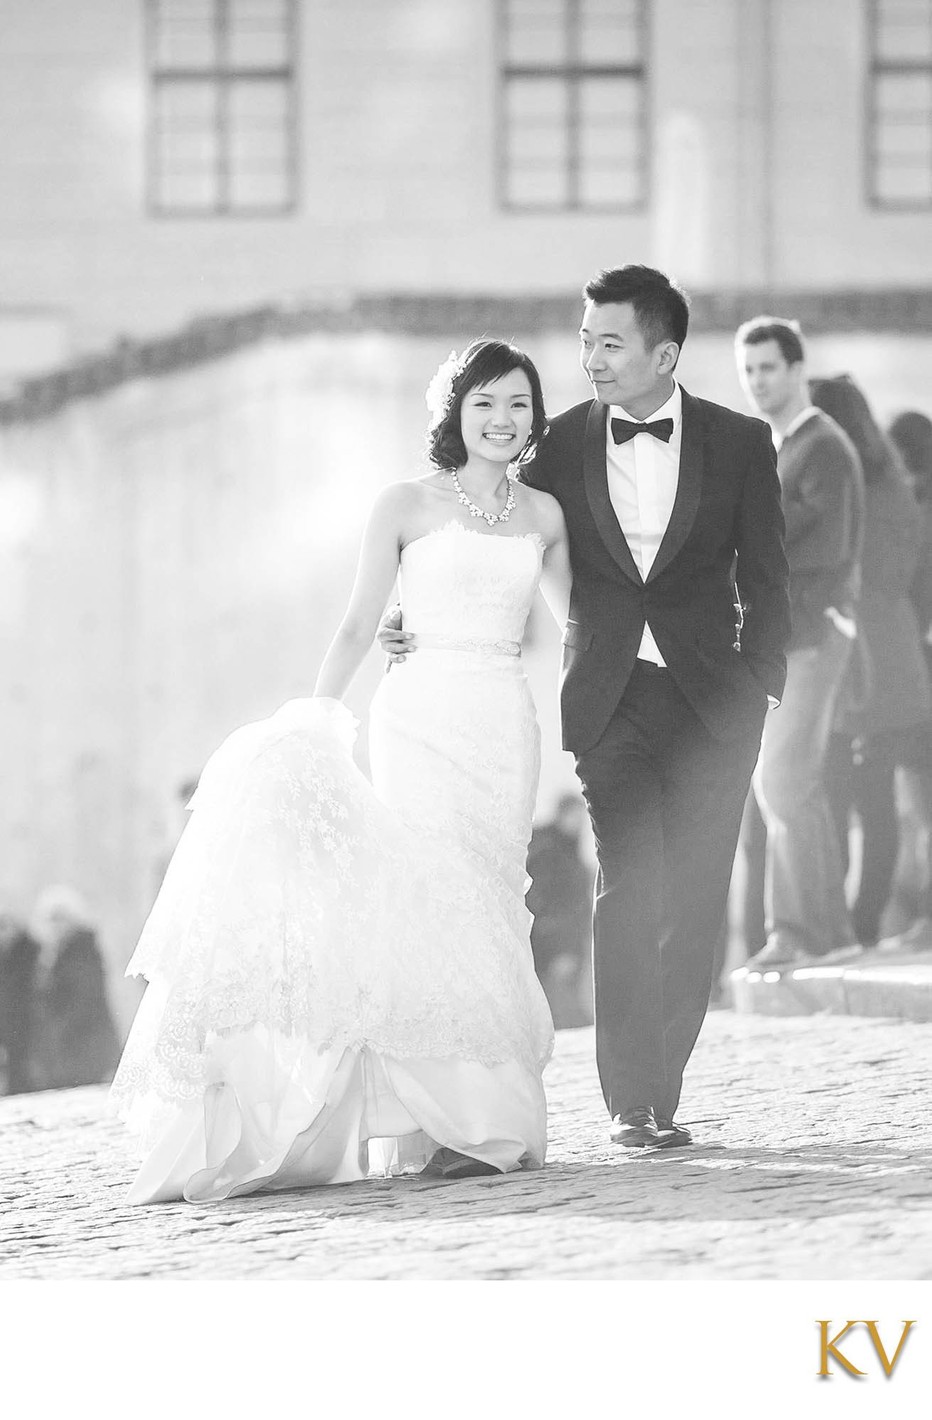 The happiest Hong Kong newlyweds in Prague